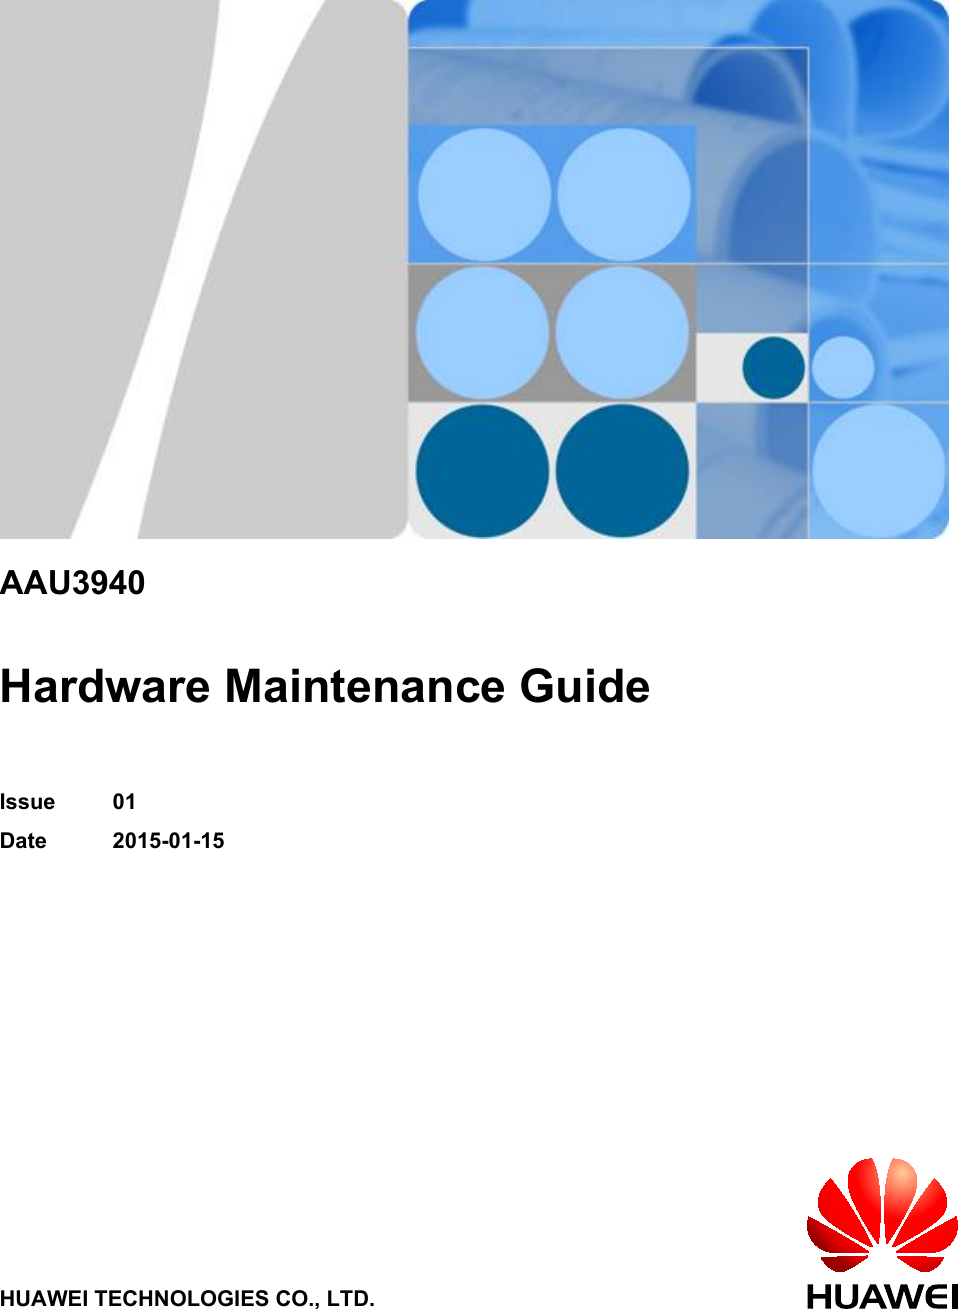 AAU3940Hardware Maintenance GuideIssue 01Date 2015-01-15HUAWEI TECHNOLOGIES CO., LTD.